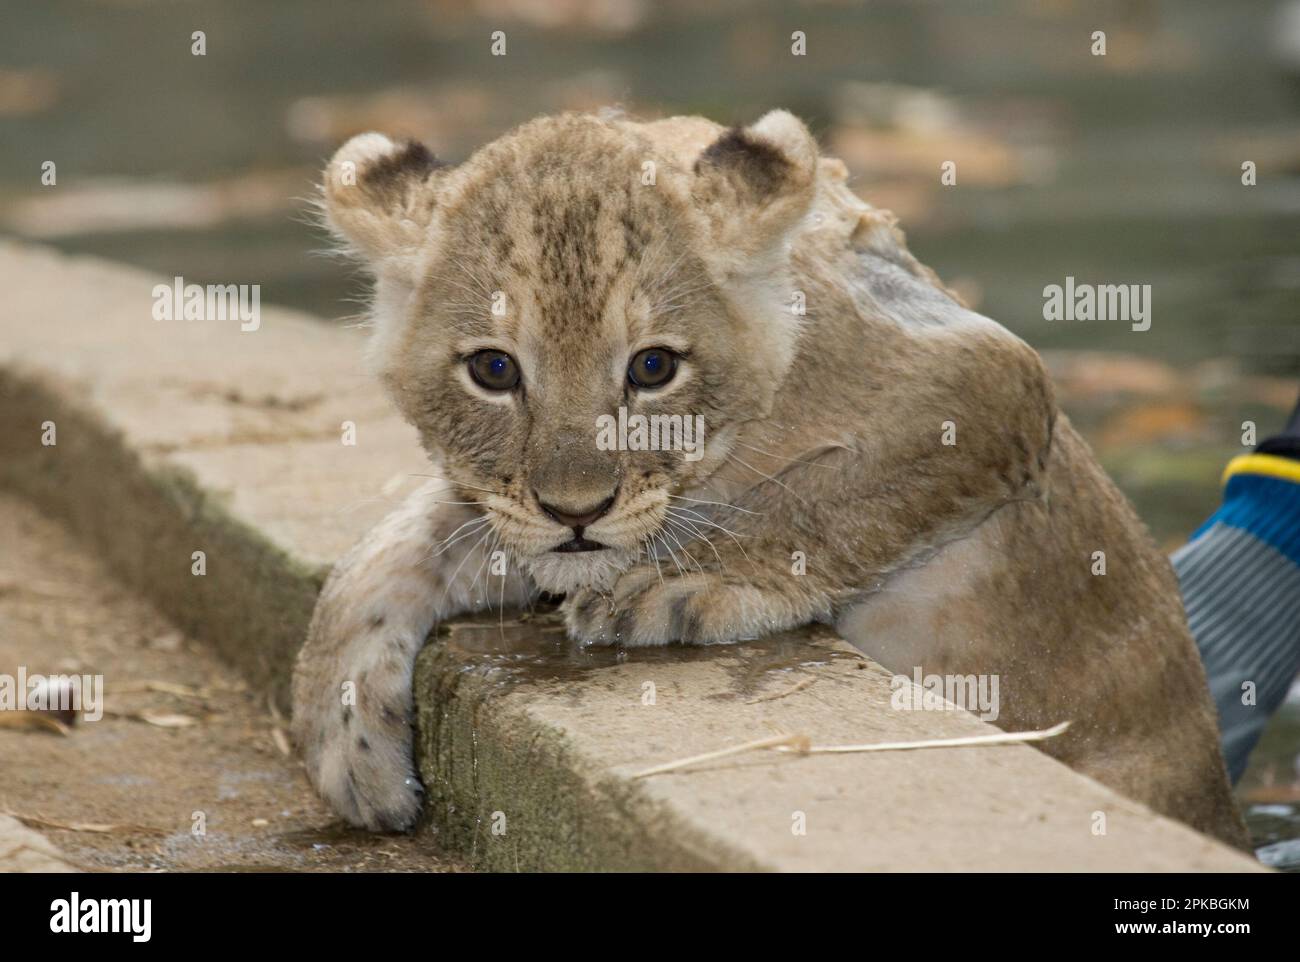 Closeup of an African lion cub looking at camera, Smithsonian National Zoological Park, Washington, DC, USA Stock Photo